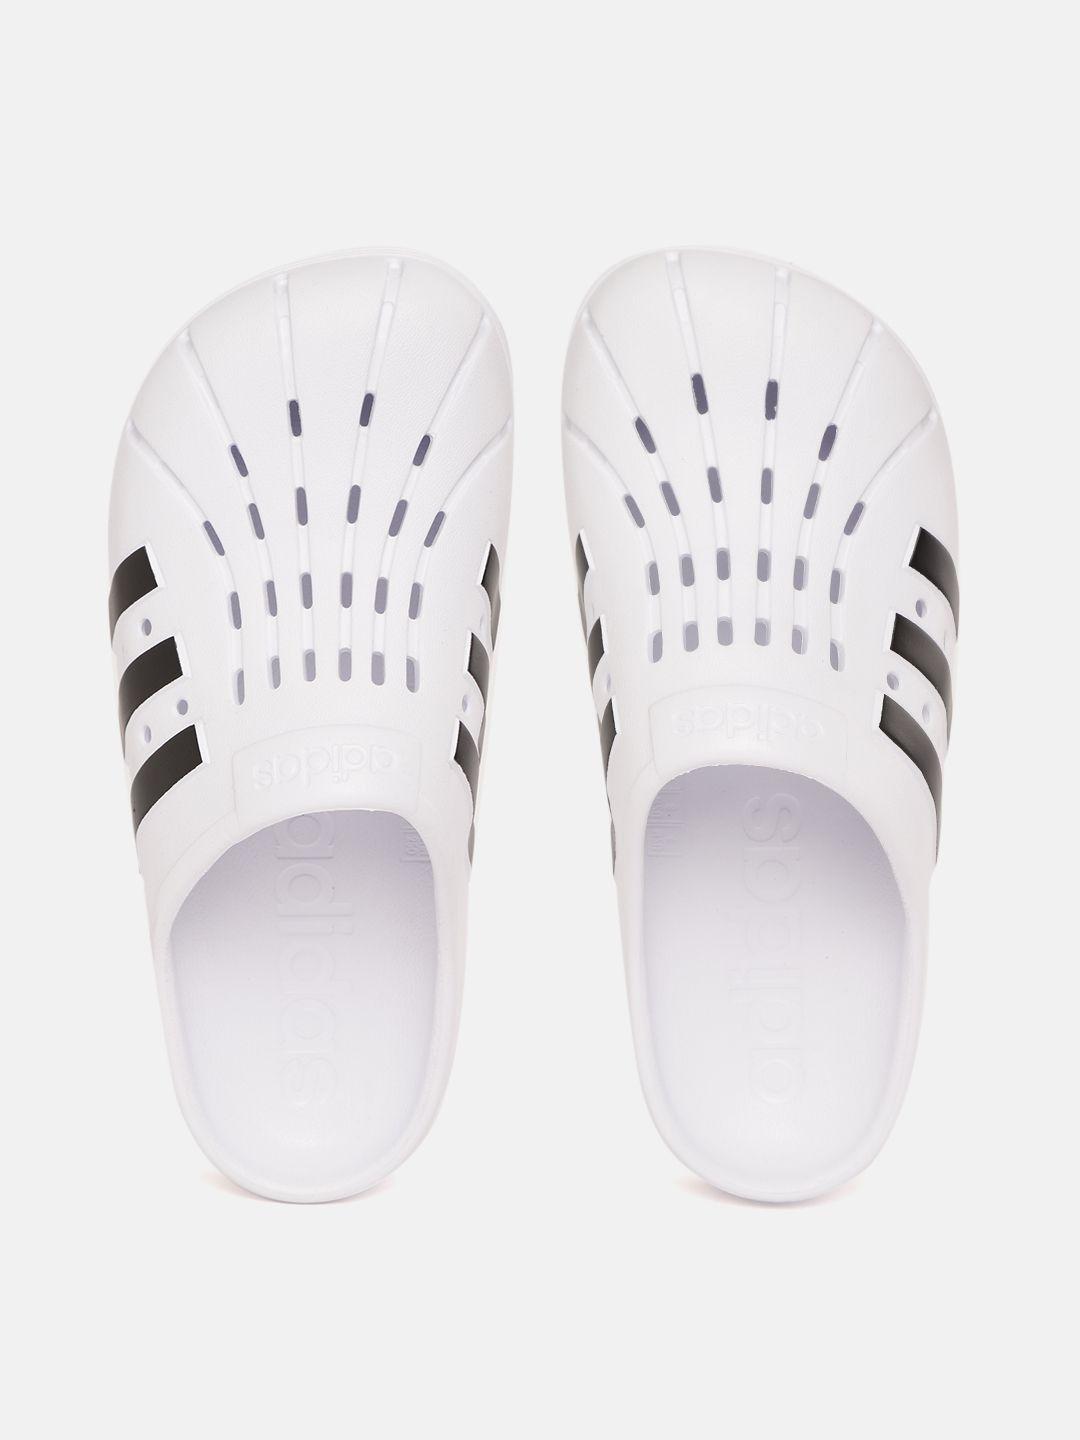 adidas unisex white & black laser cuts starlette clogs